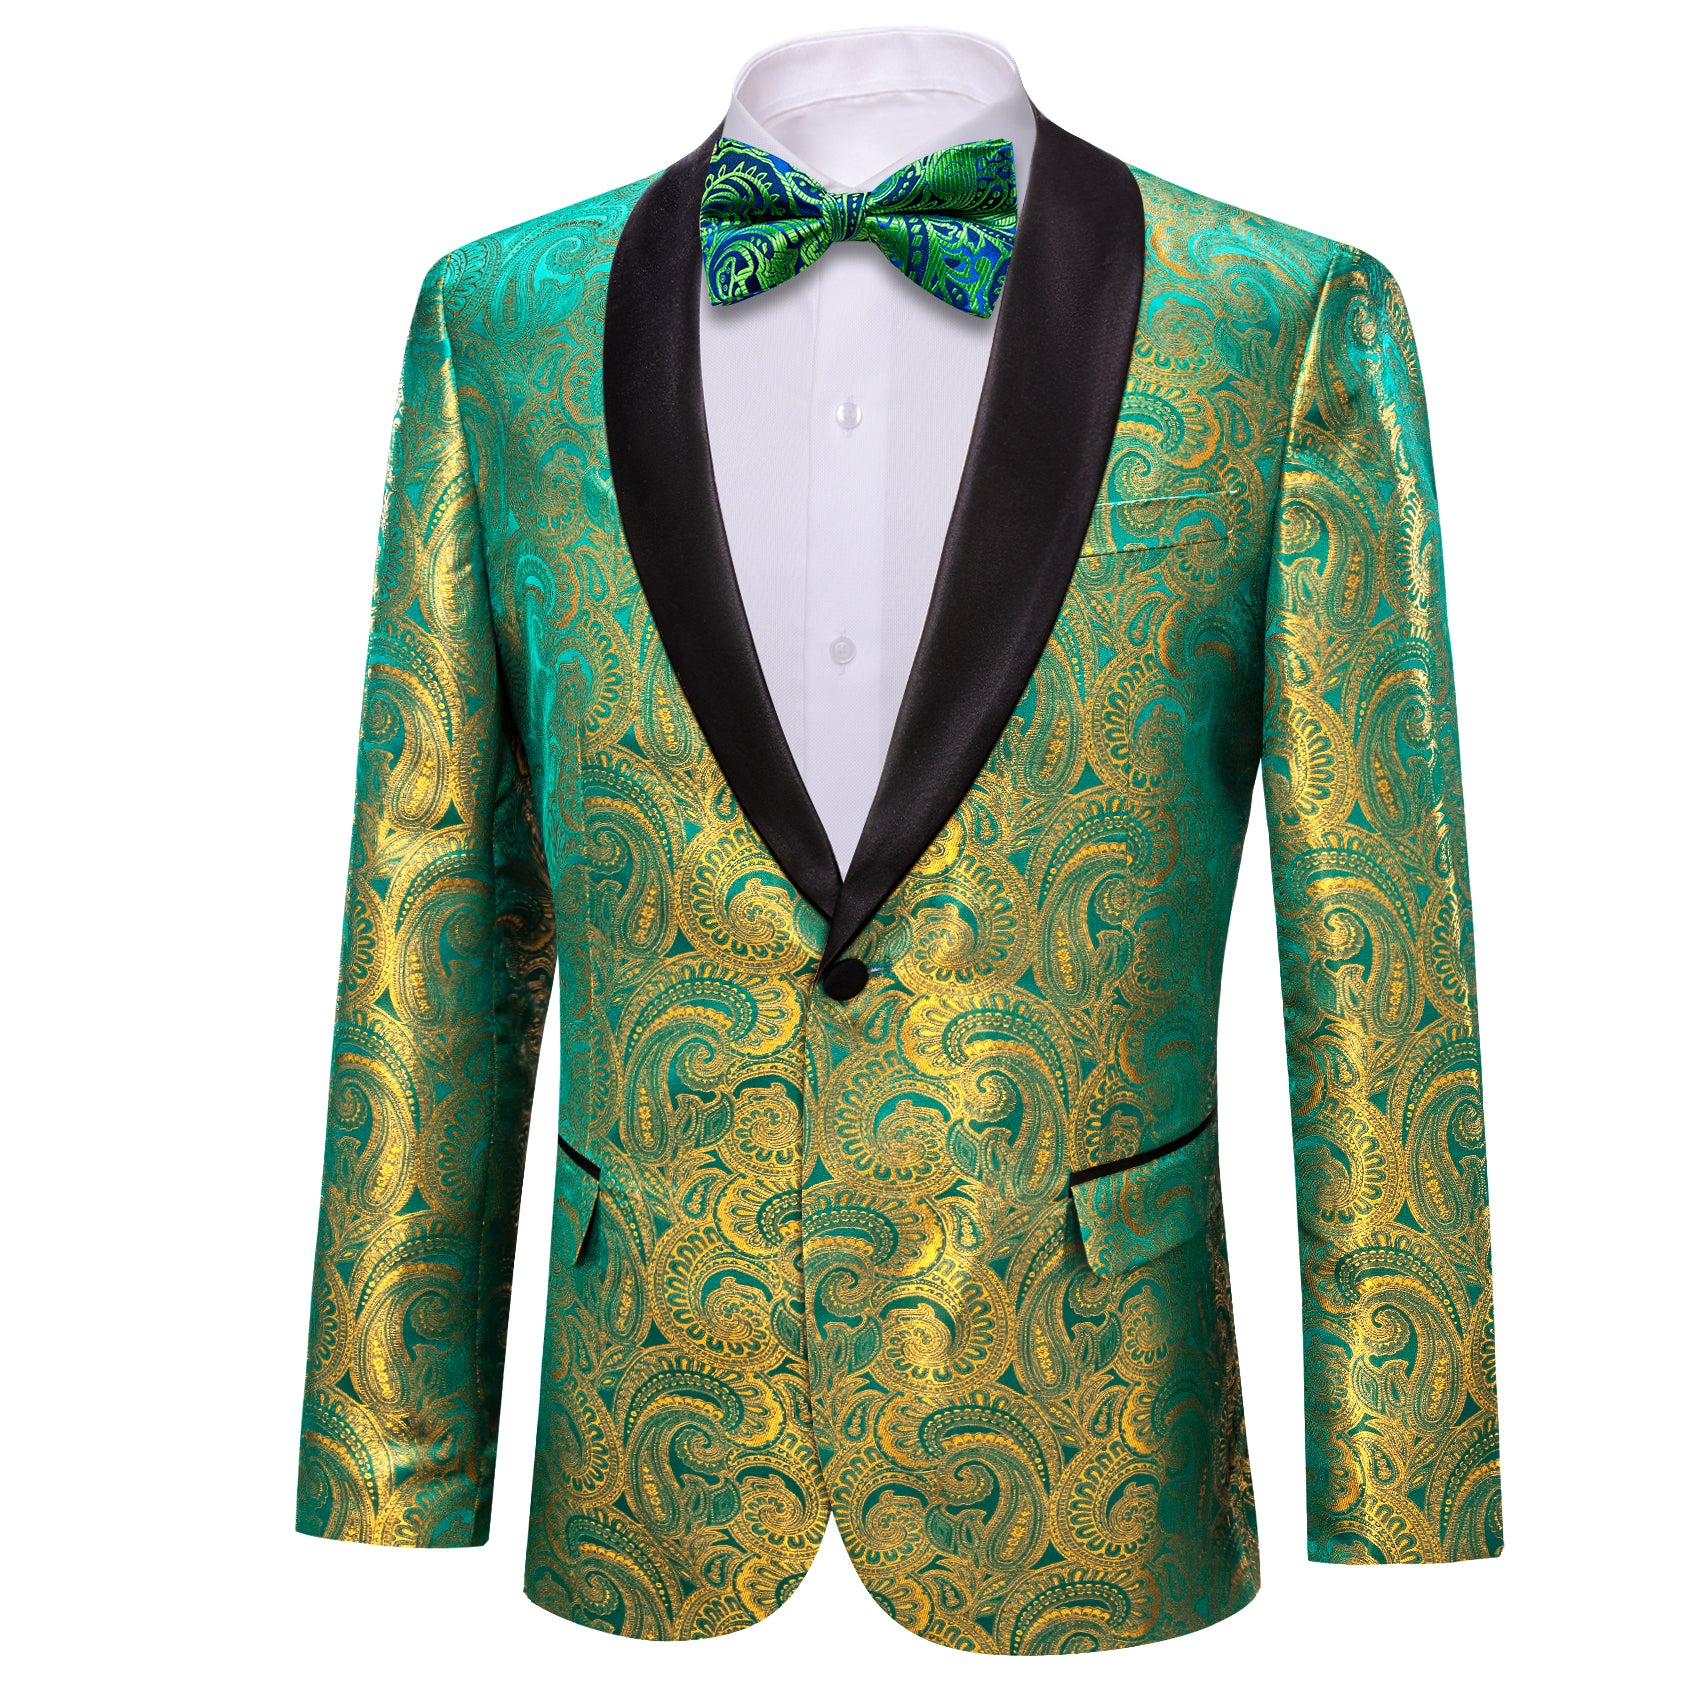  Shawl Collar Suit Men's Bright Green Floral Suit Jacket